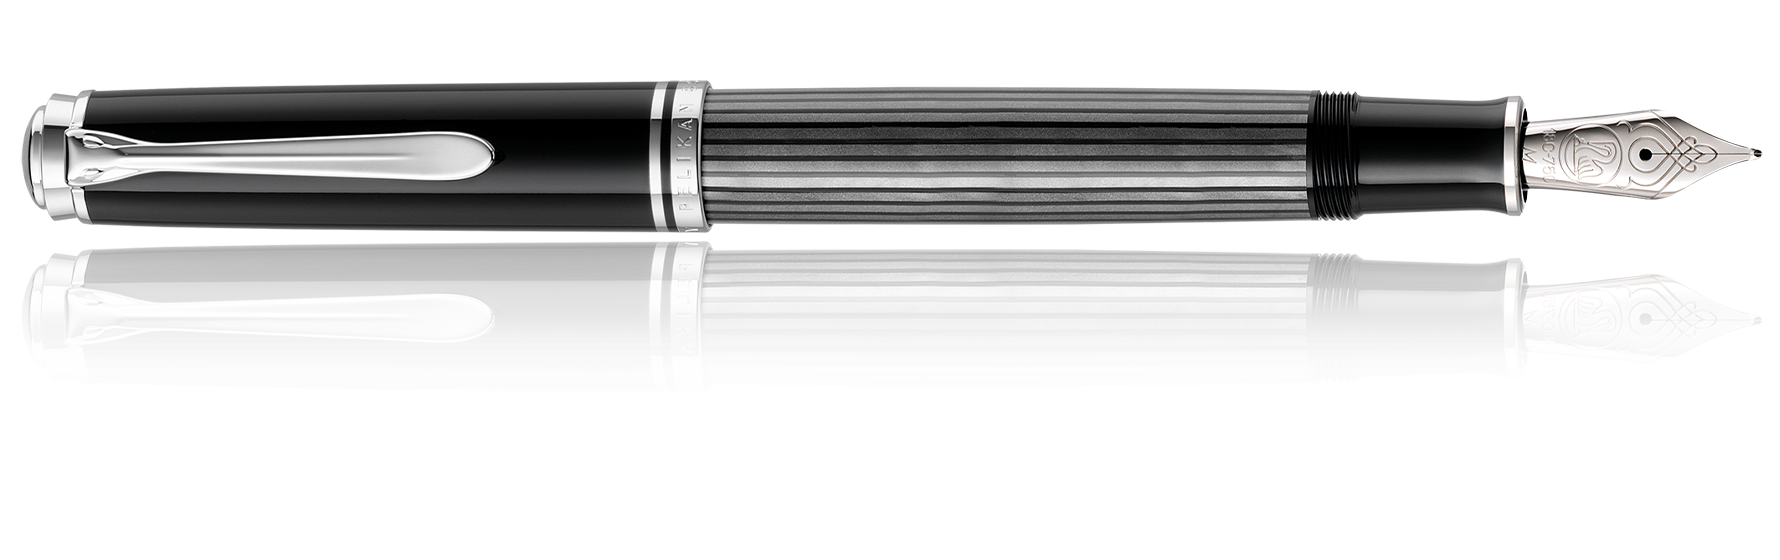 Pelikan Souveran M805 Streseman Anthracite Stripes Fountain Pen